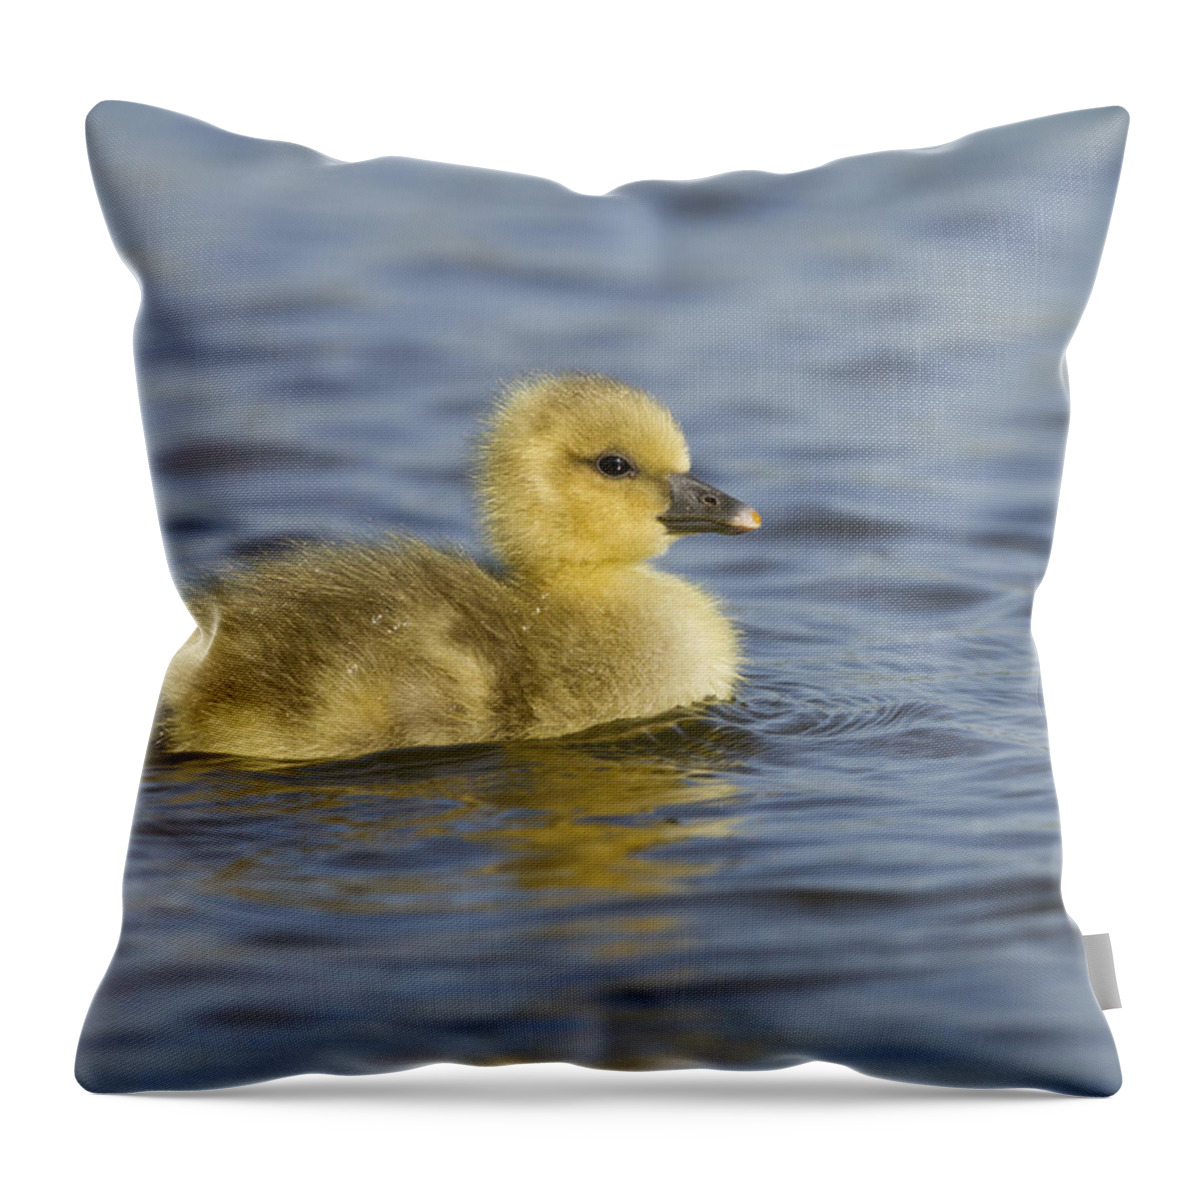 Nis Throw Pillow featuring the photograph Greylag Goose Gosling Zeeland by Sytze Jongma